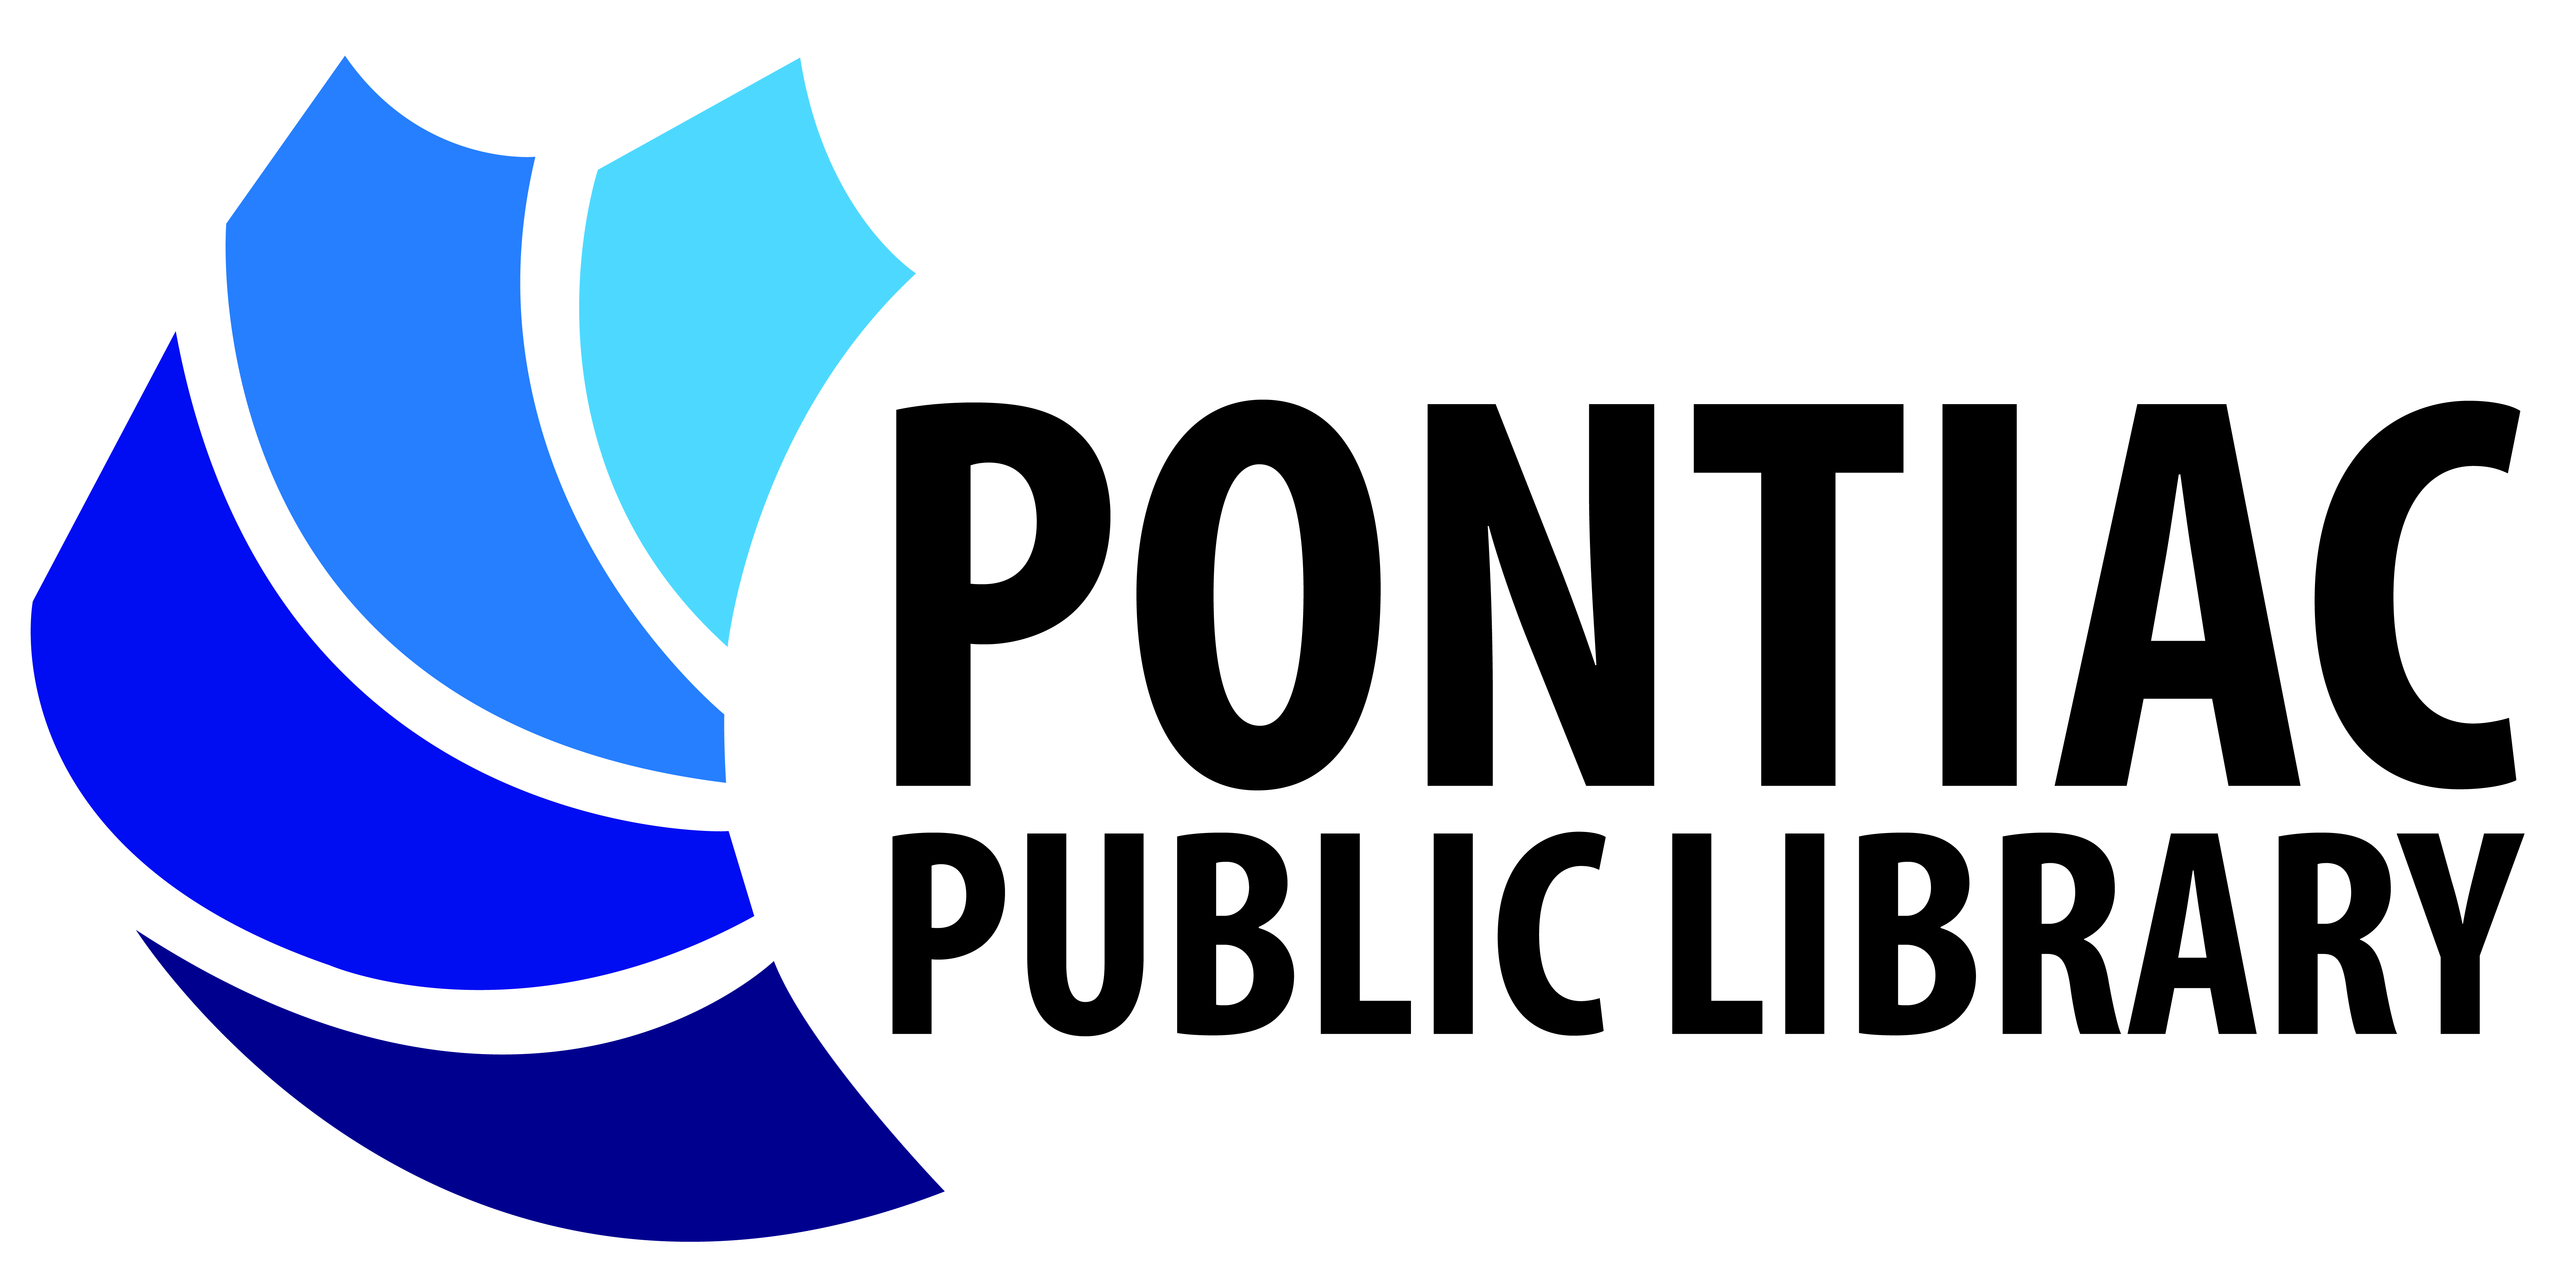 Pontiac Public Library